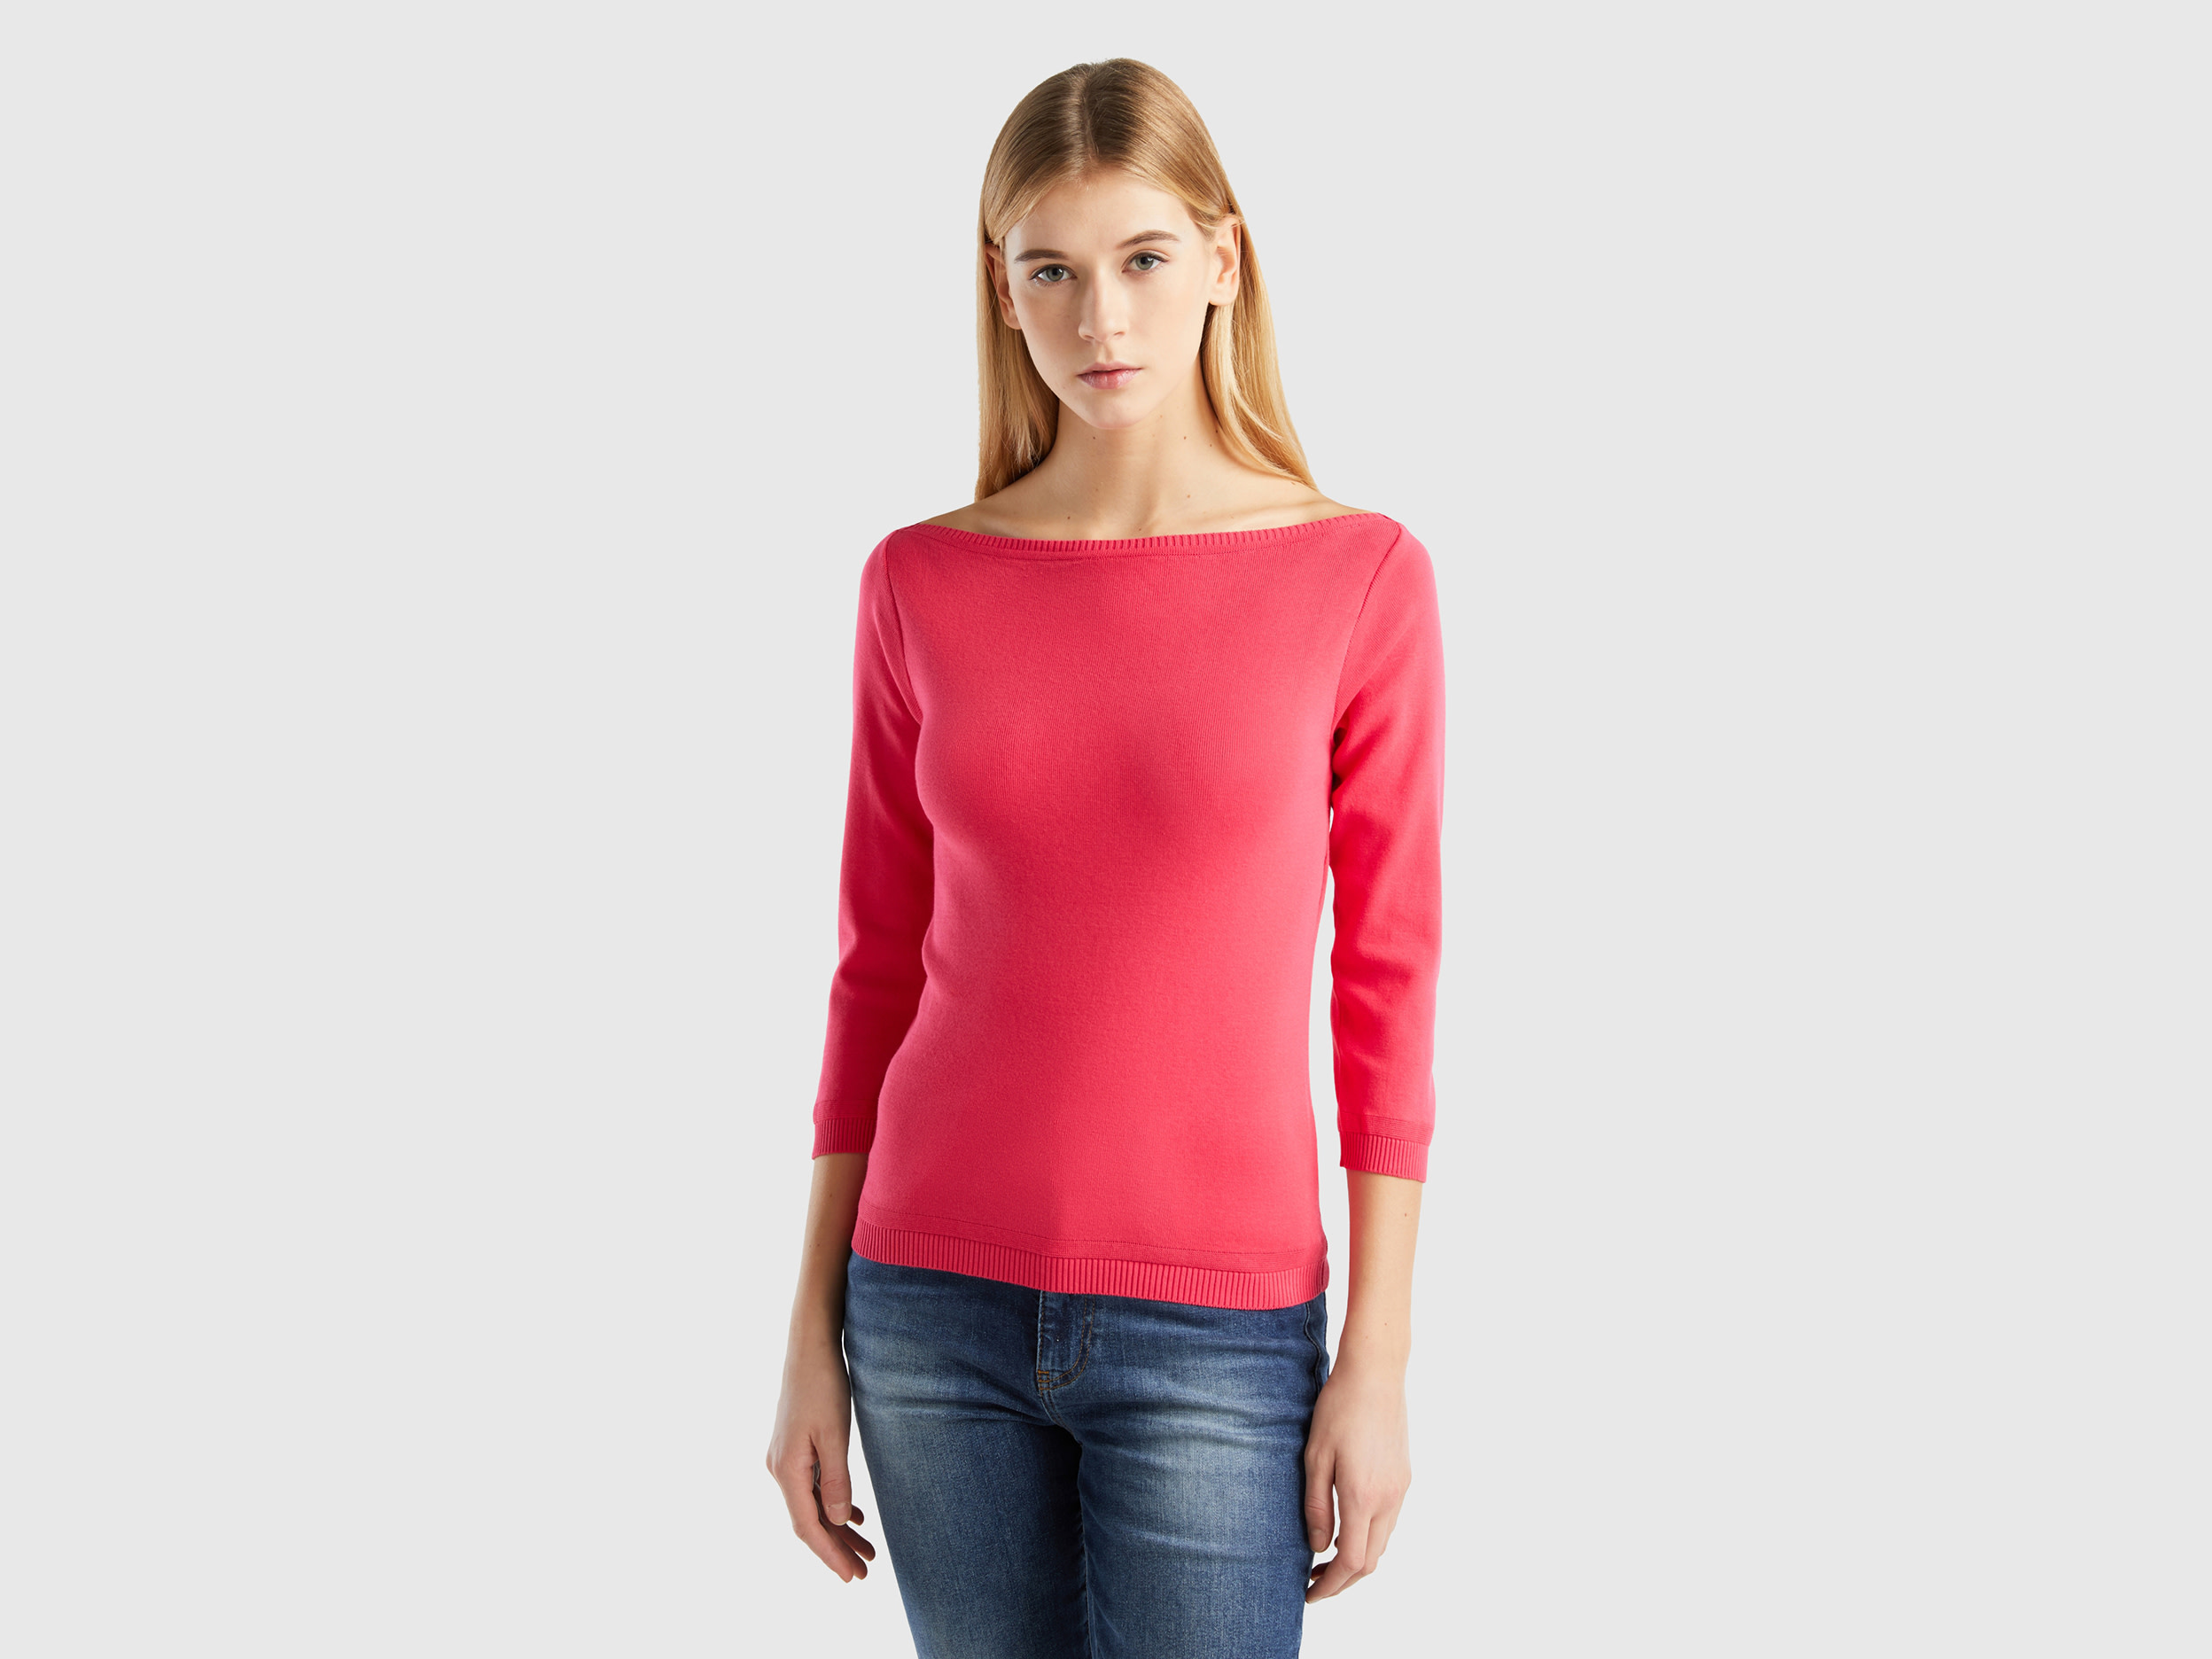 Benetton, 100% Cotton Boat Neck Sweater, size L, Fuchsia, Women